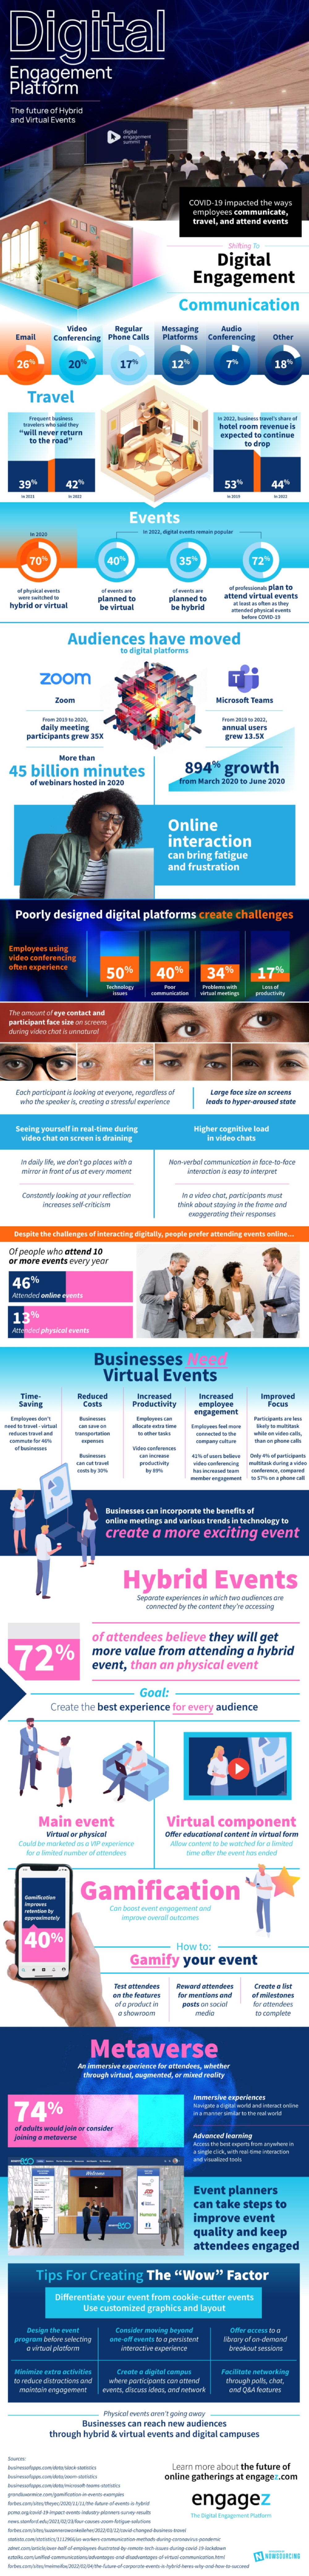 digital engagement 1000 Digital Engagement Platform: The Future of Hybrid & Virtual Events